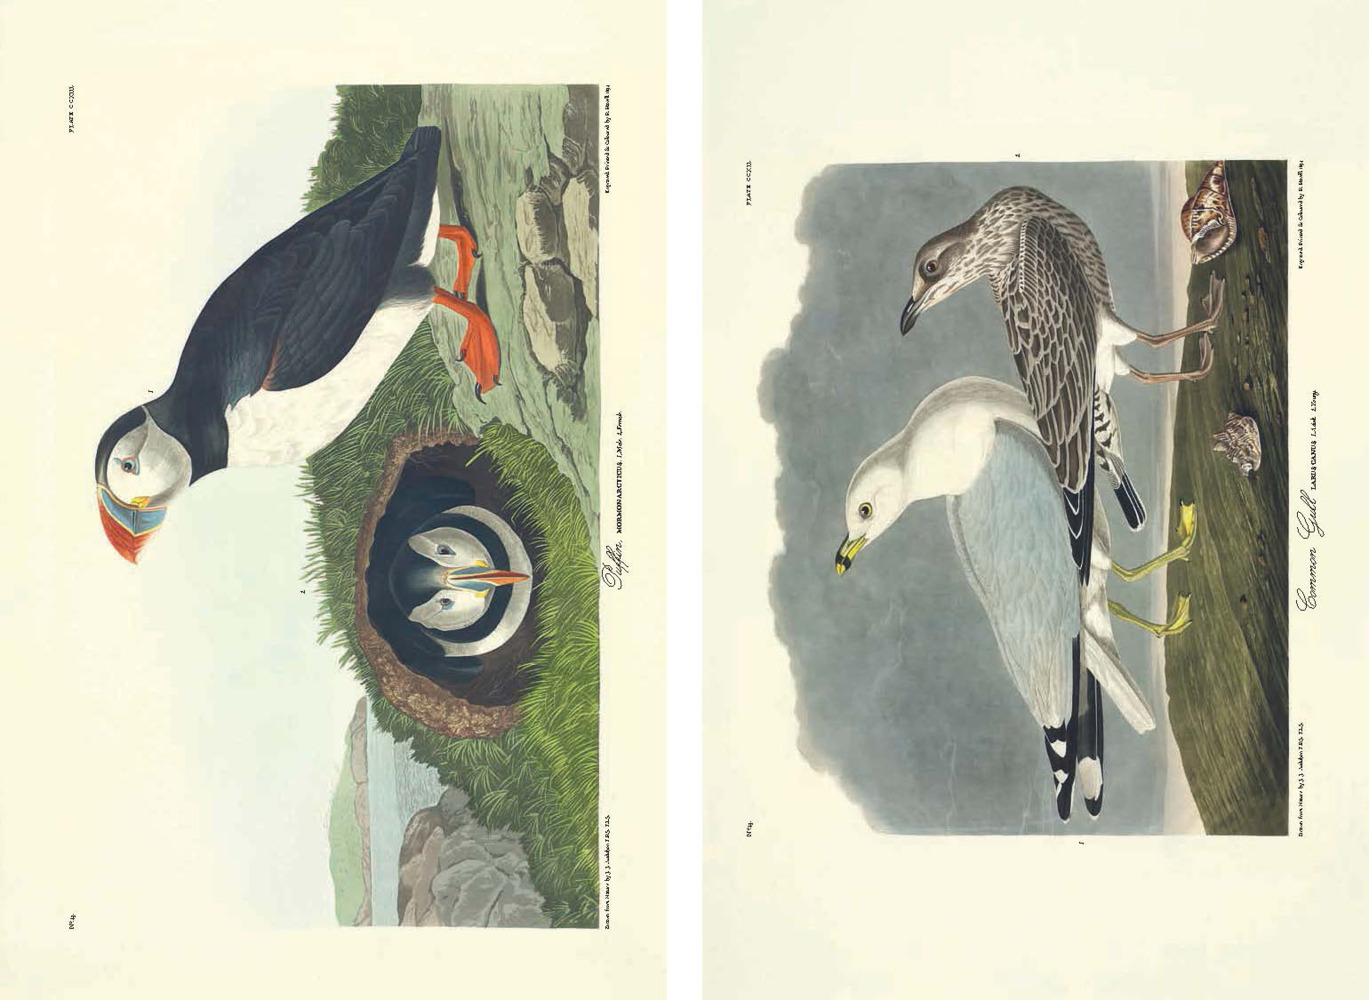 Bild: 9783791379135 | Die Vögel Amerikas | John James Audubon (u. a.) | Buch | 448 S. | 2021